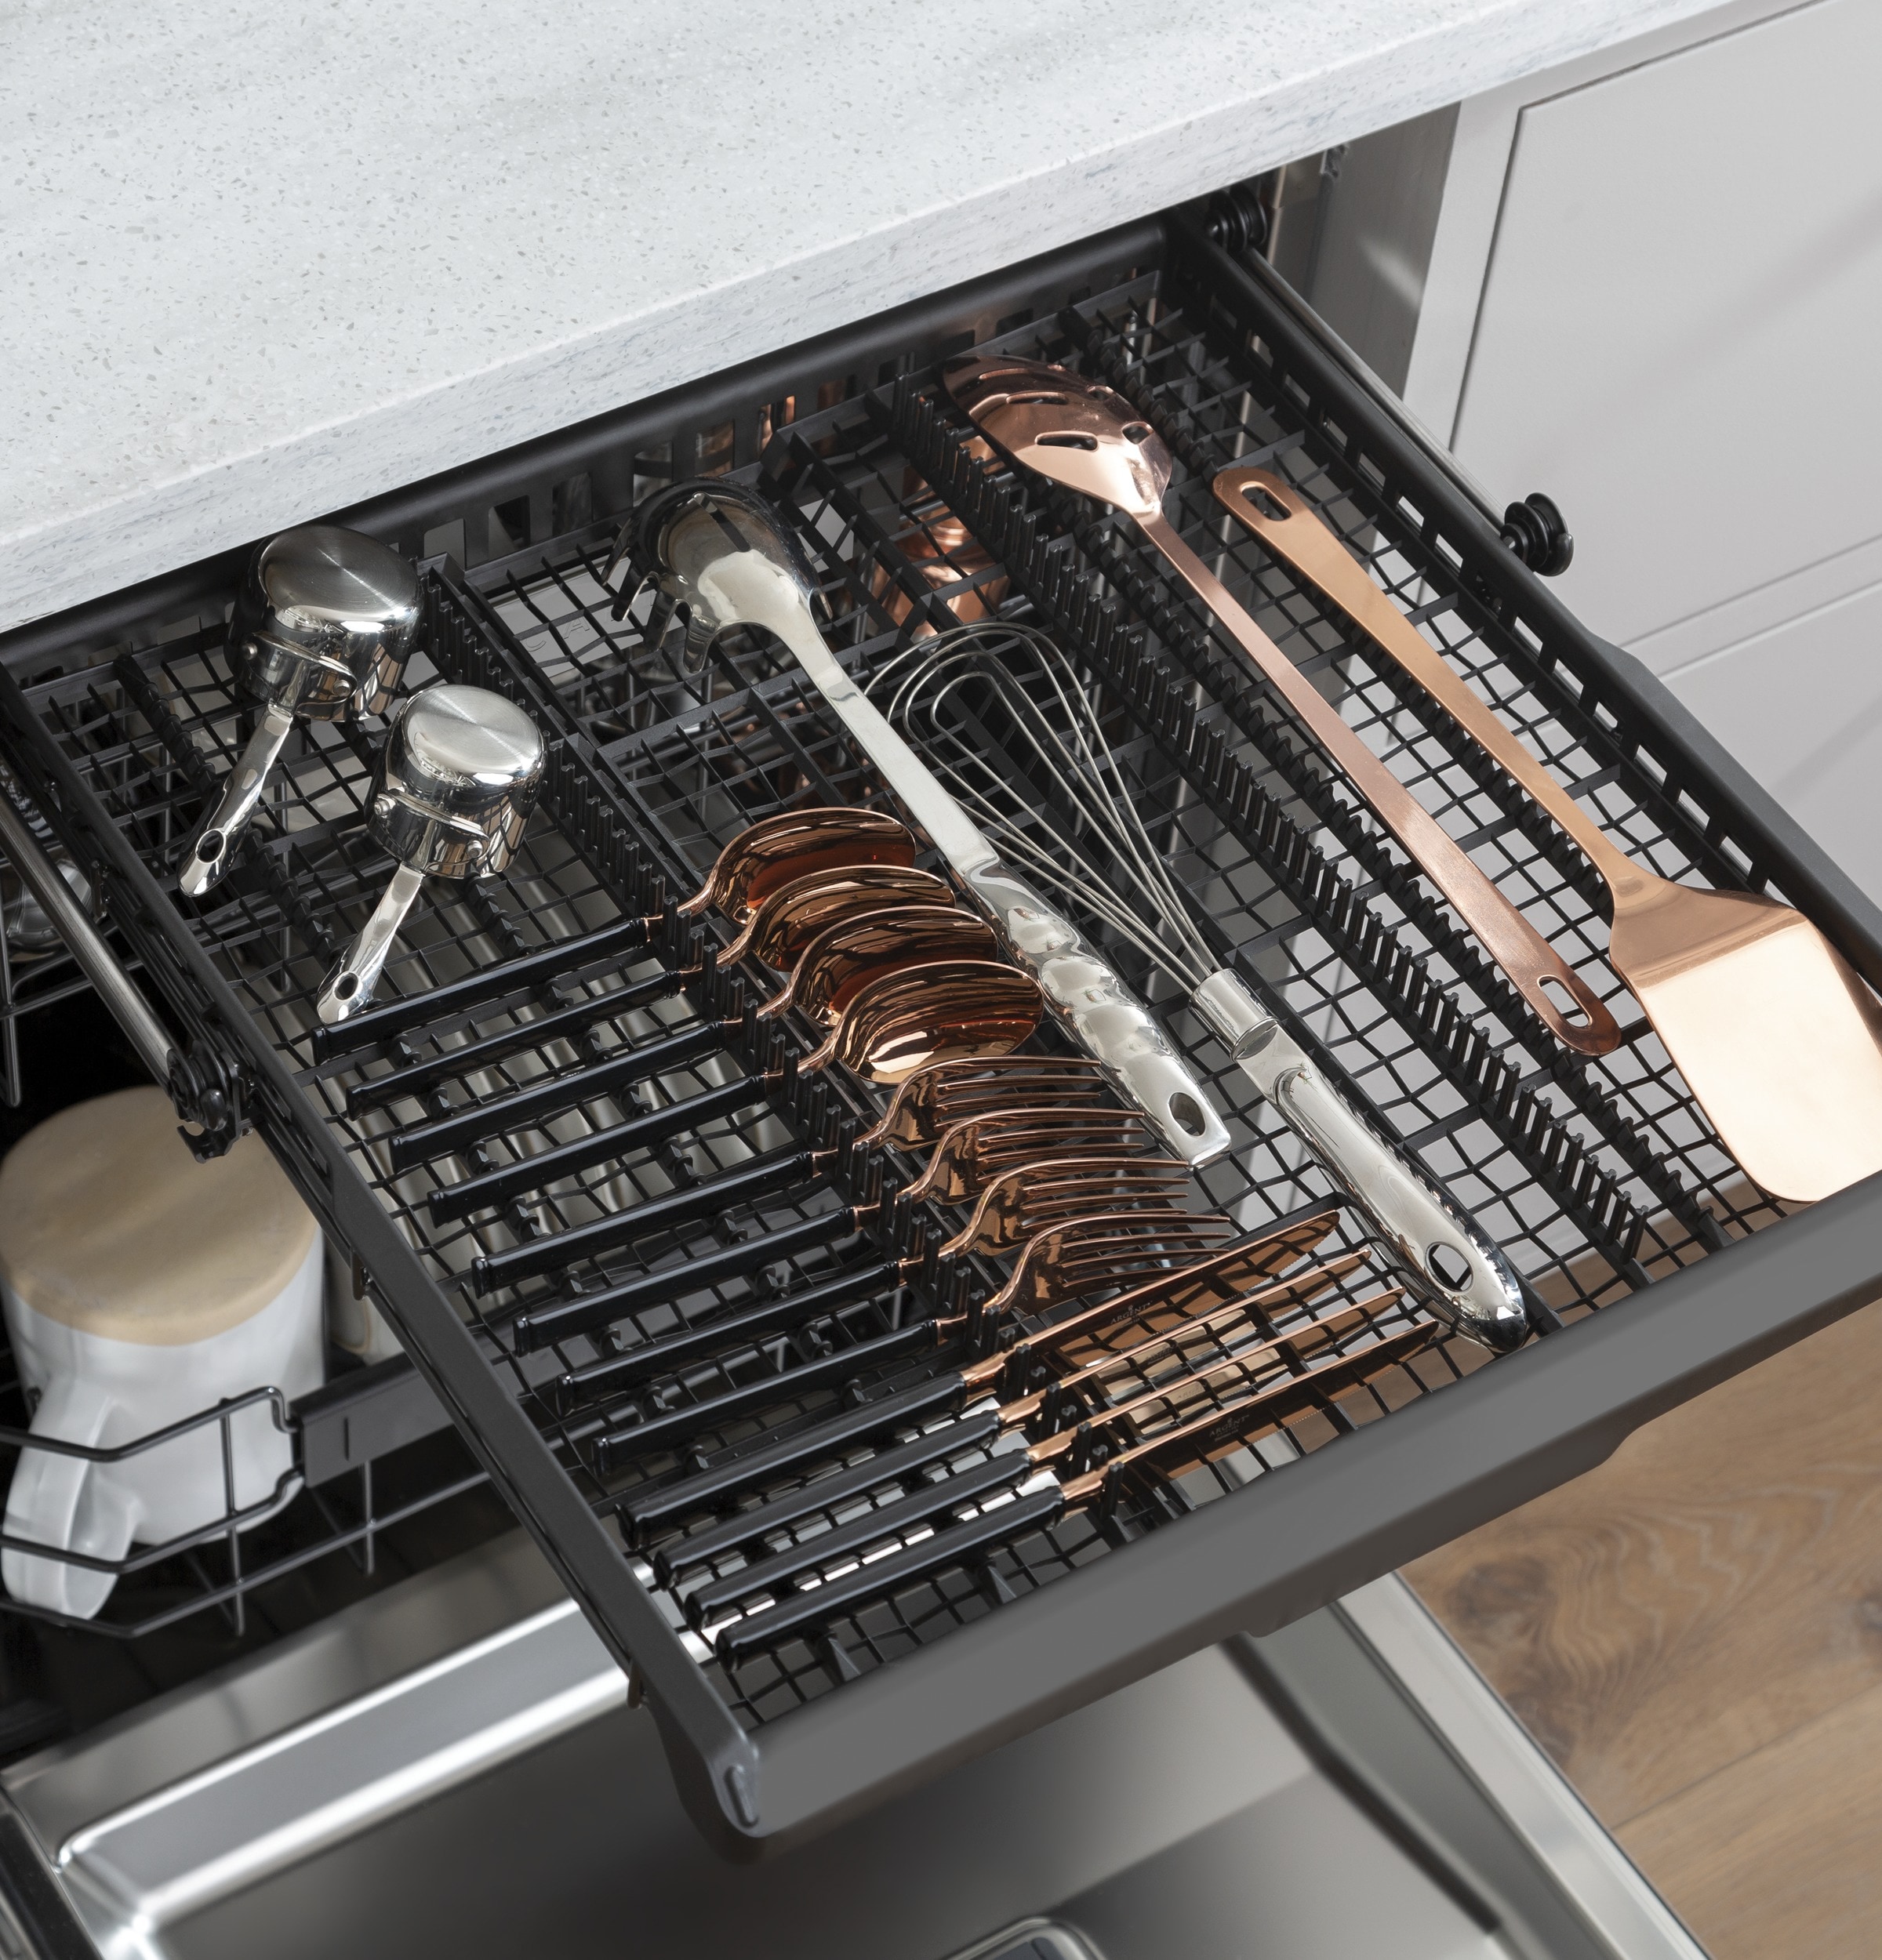 GE Appliances 24 Double Drawer Dishwasher in Matte White